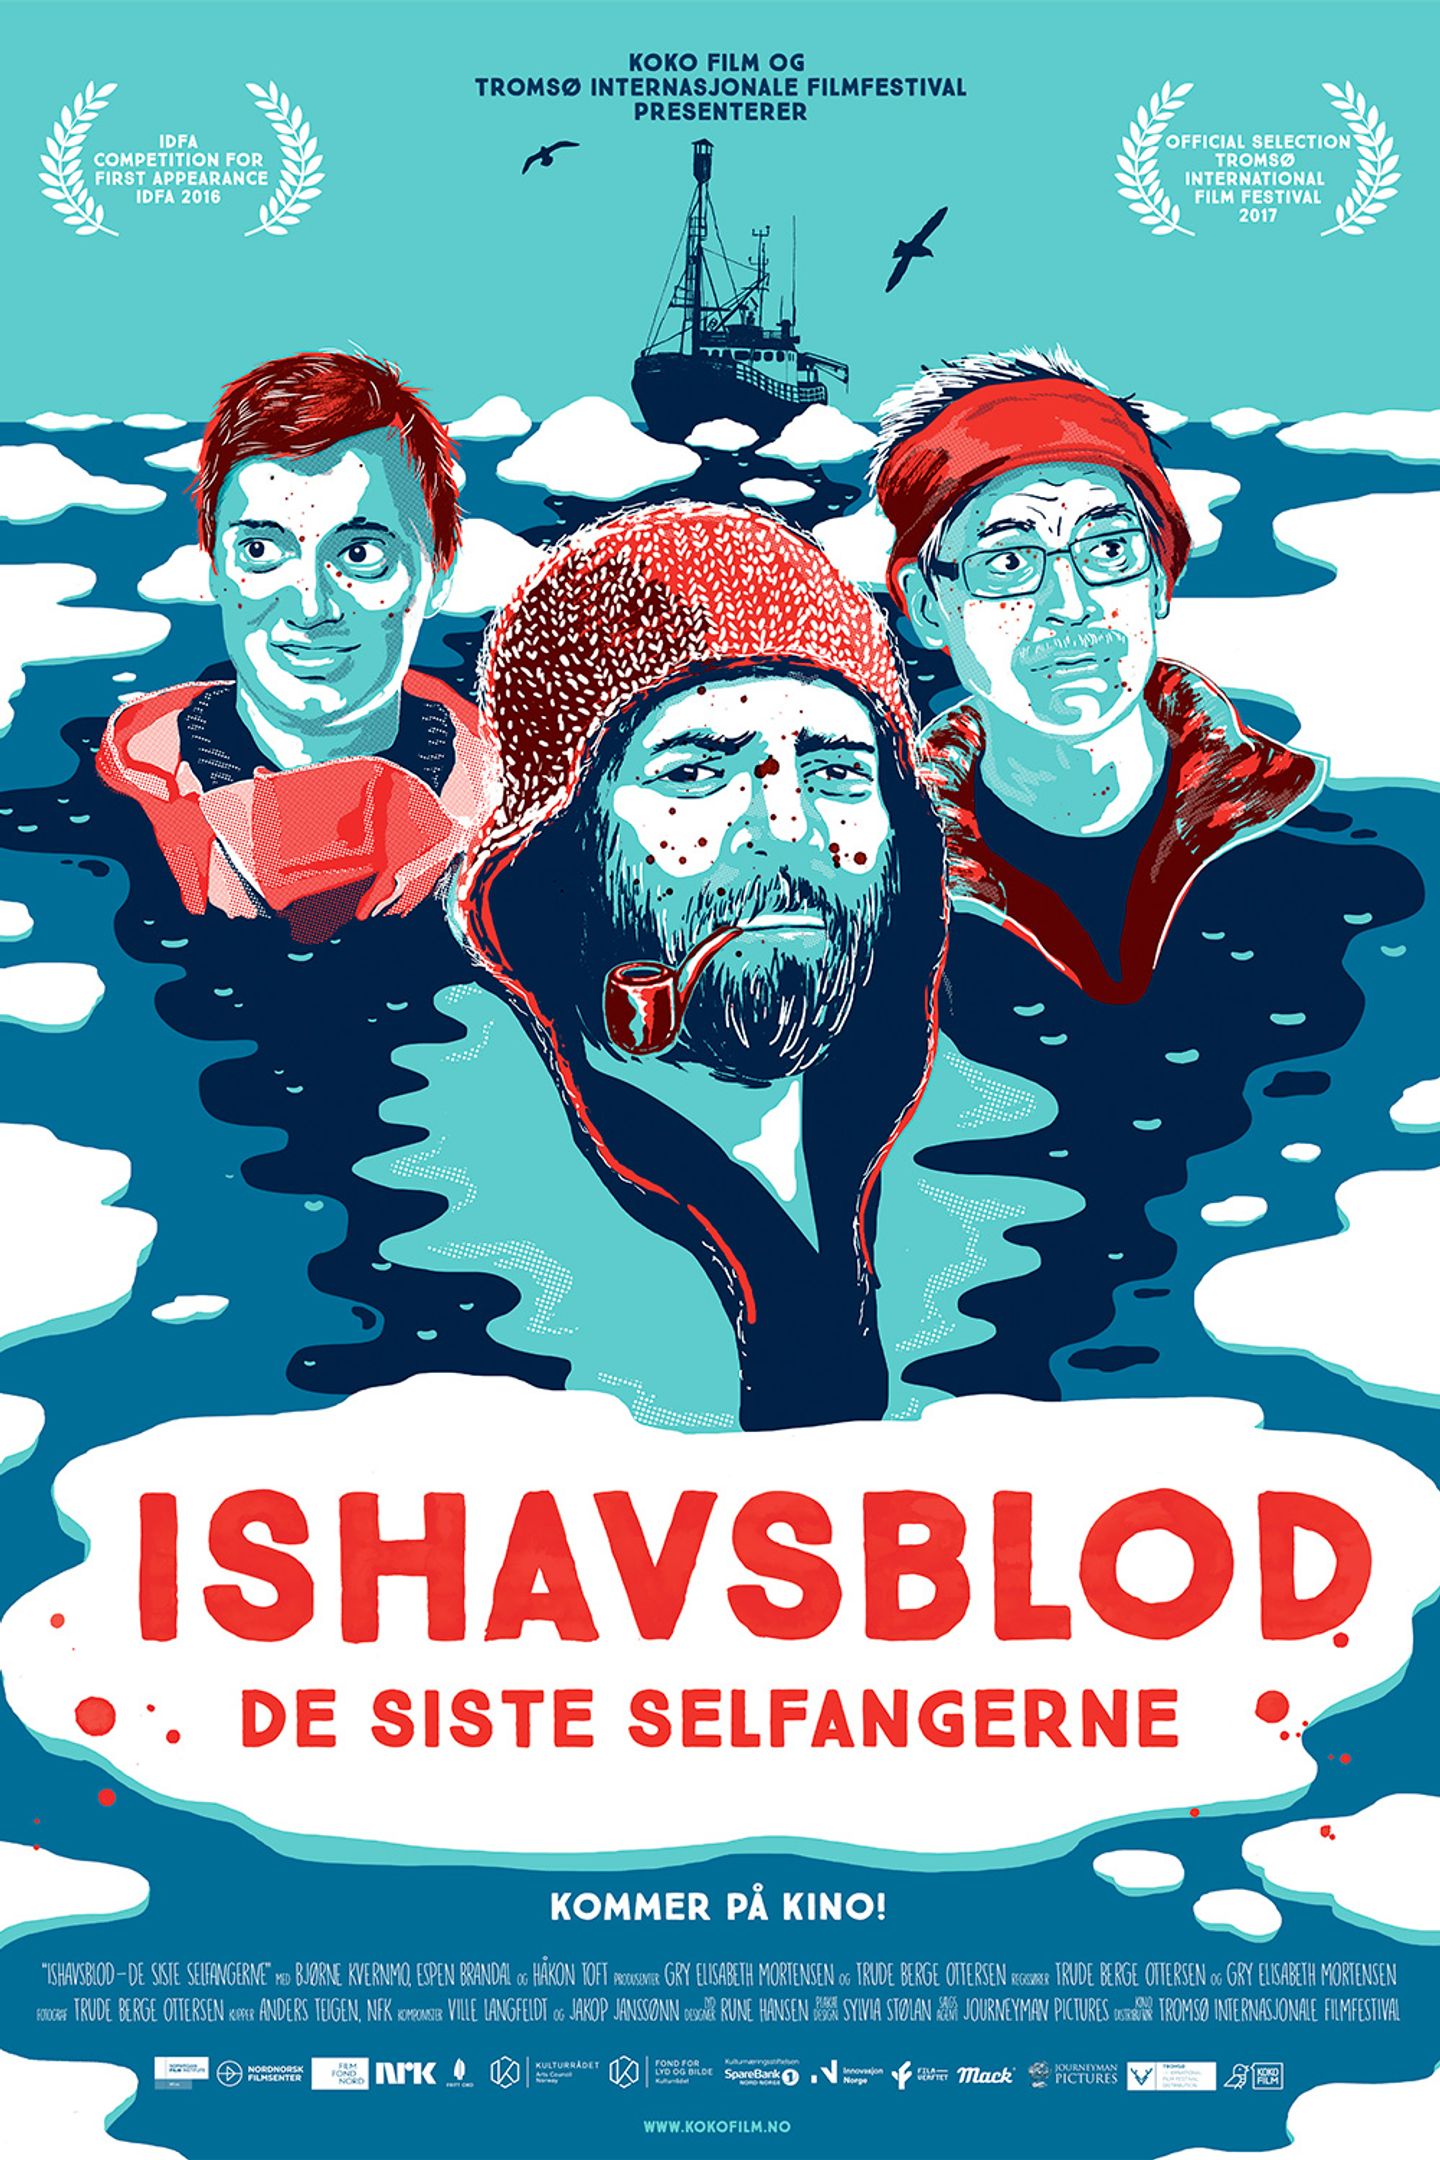 Plakat for 'Ishavsblod'